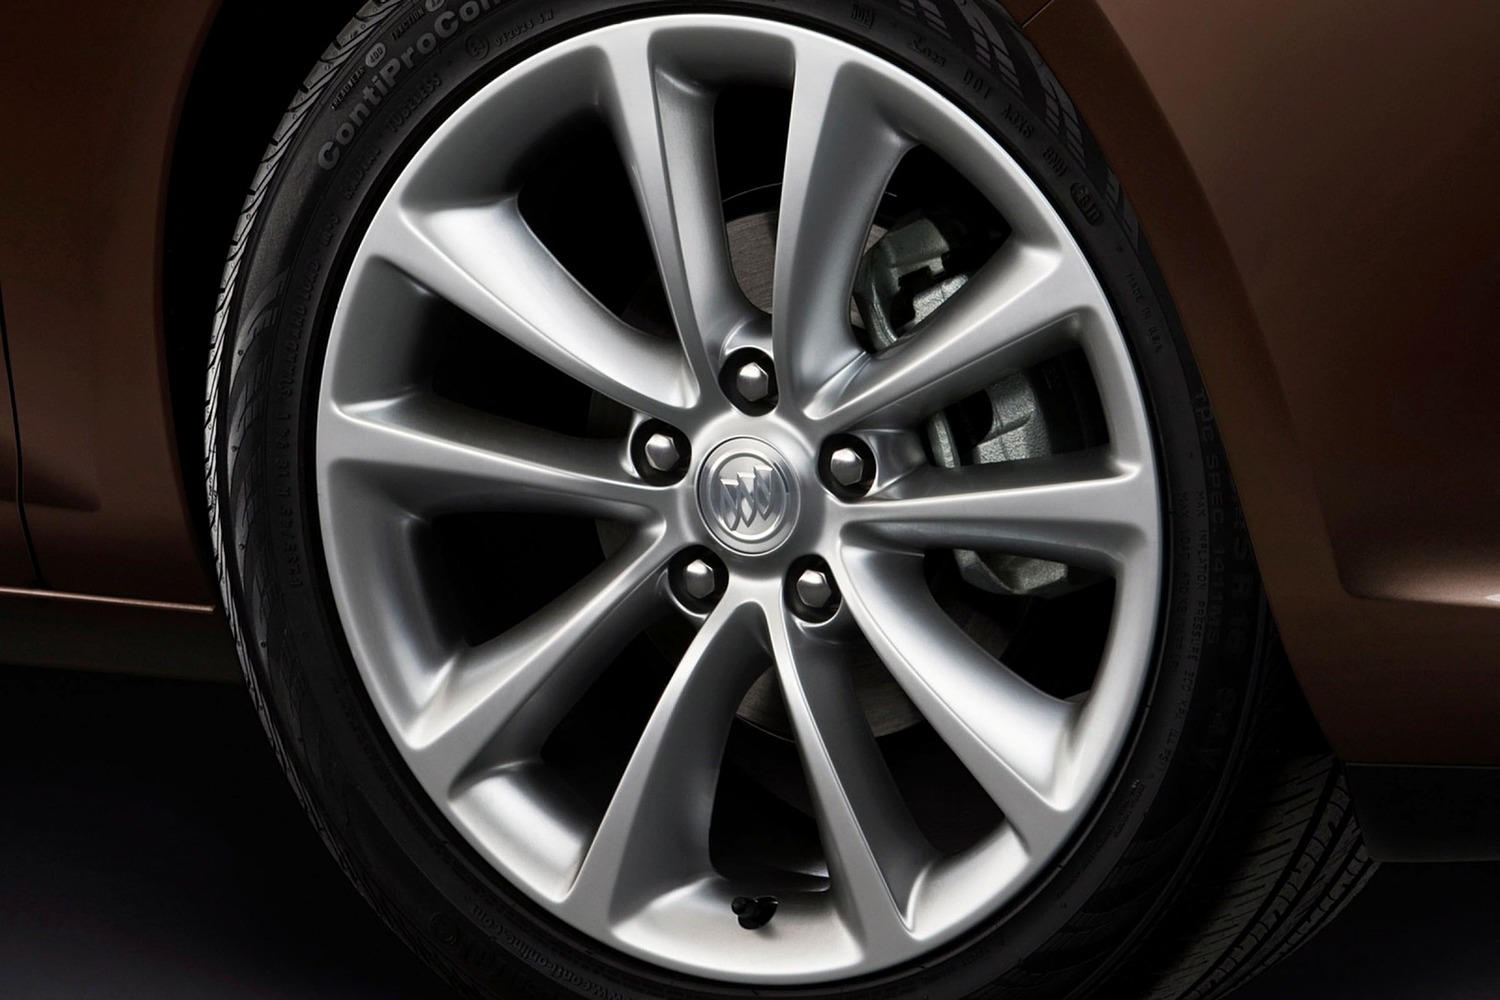 Buick Verano Sedan Wheel (2013 model year shown)